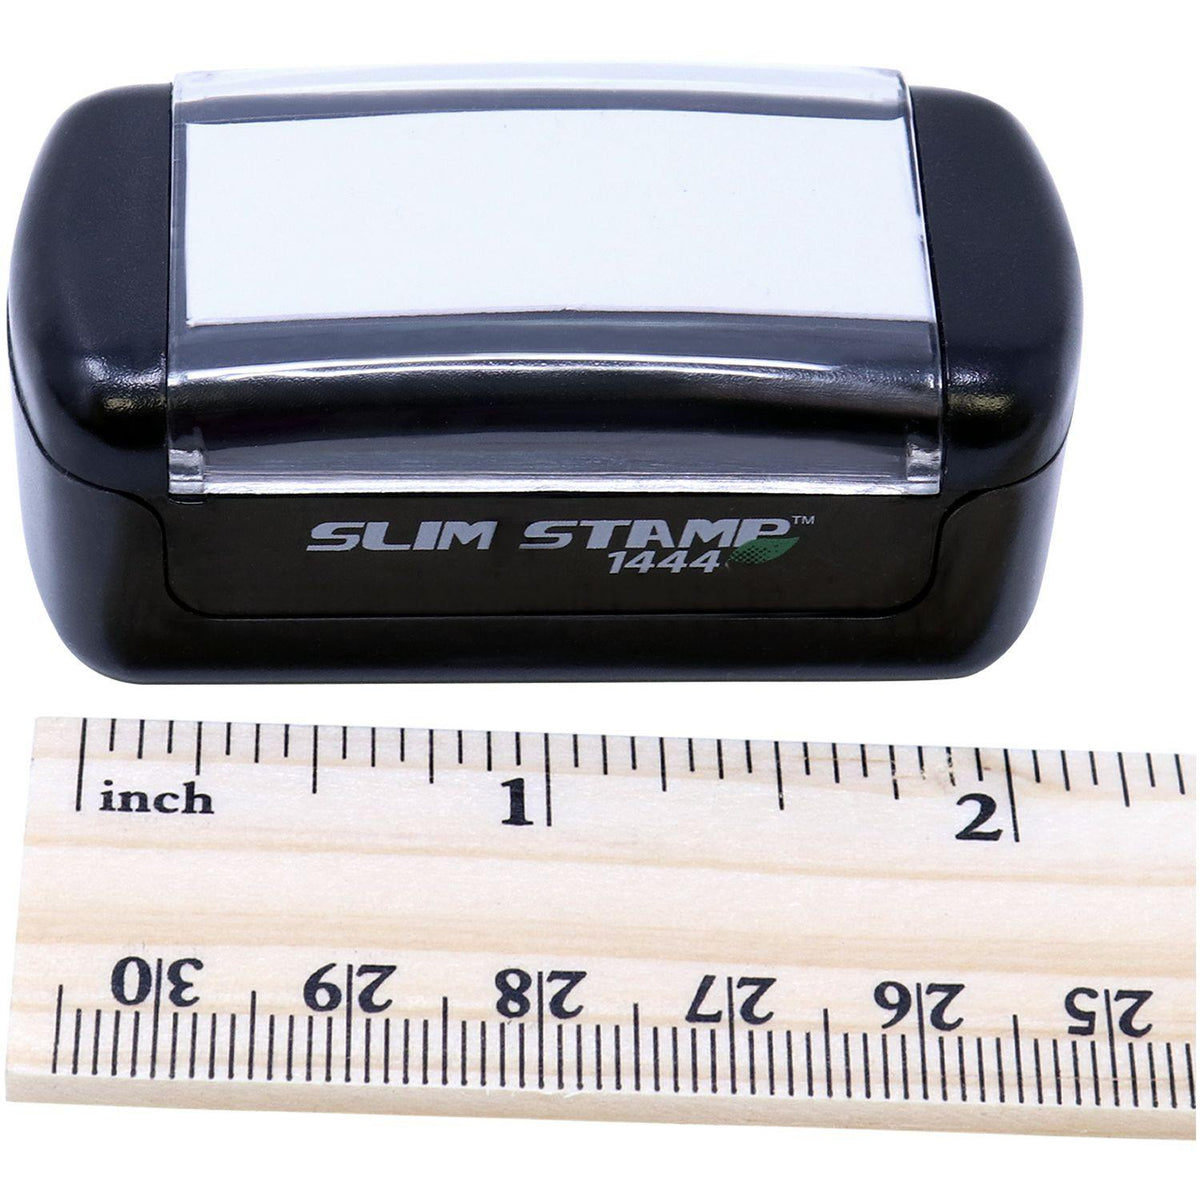 Measurement Slim Pre-Inked Facturado Stamp with Ruler